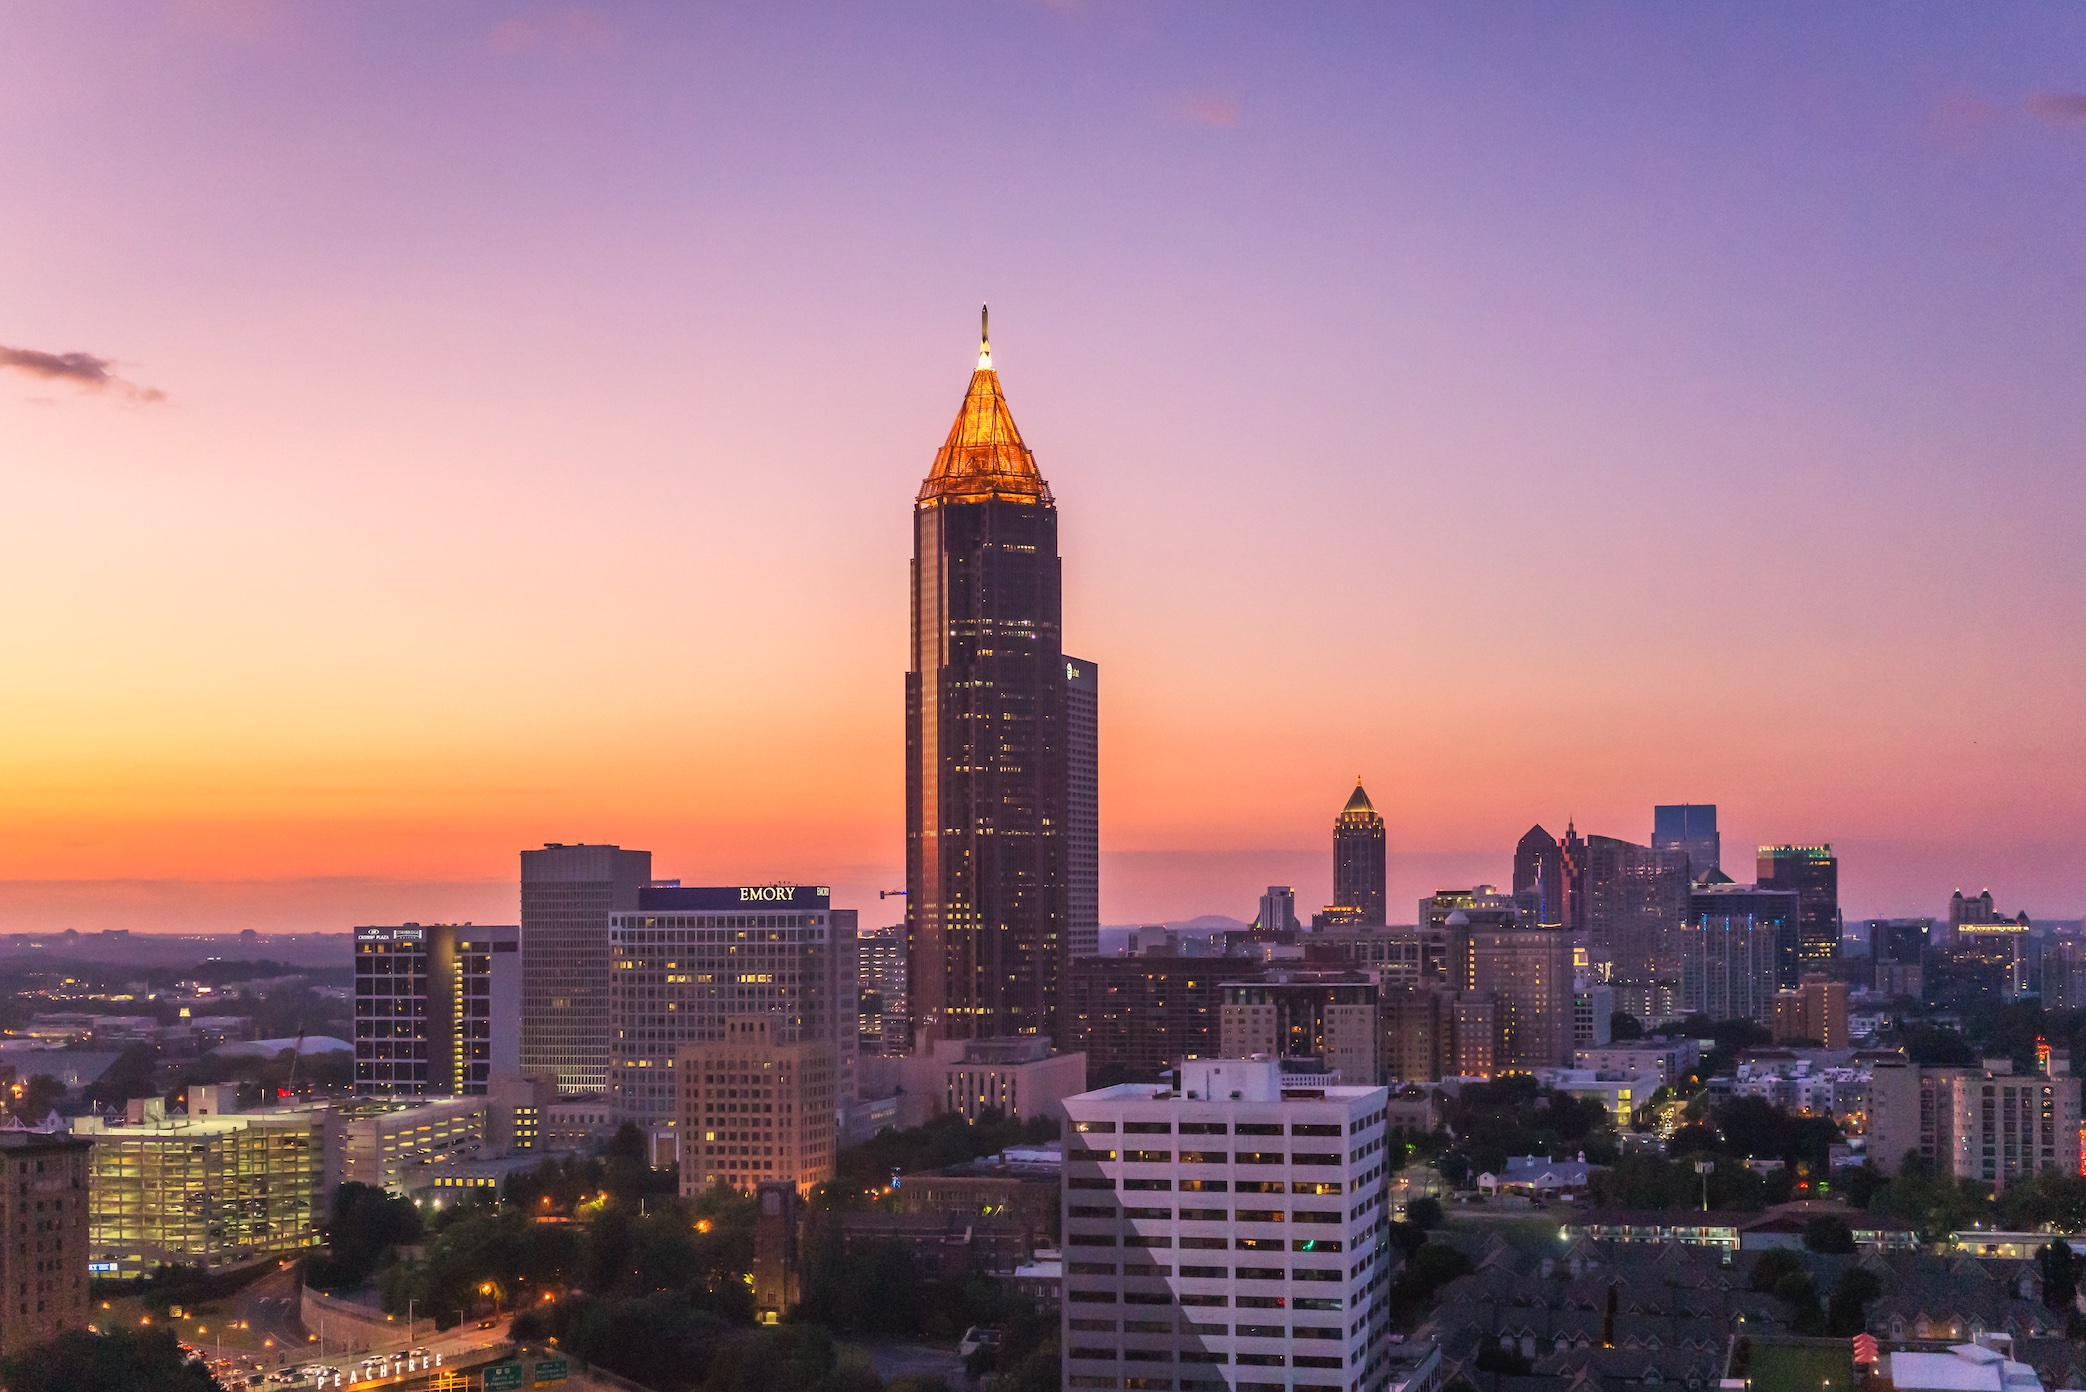 Midtown Atlanta skyline at just after sunset; image by Brad Huchteman, via Unsplash.com.